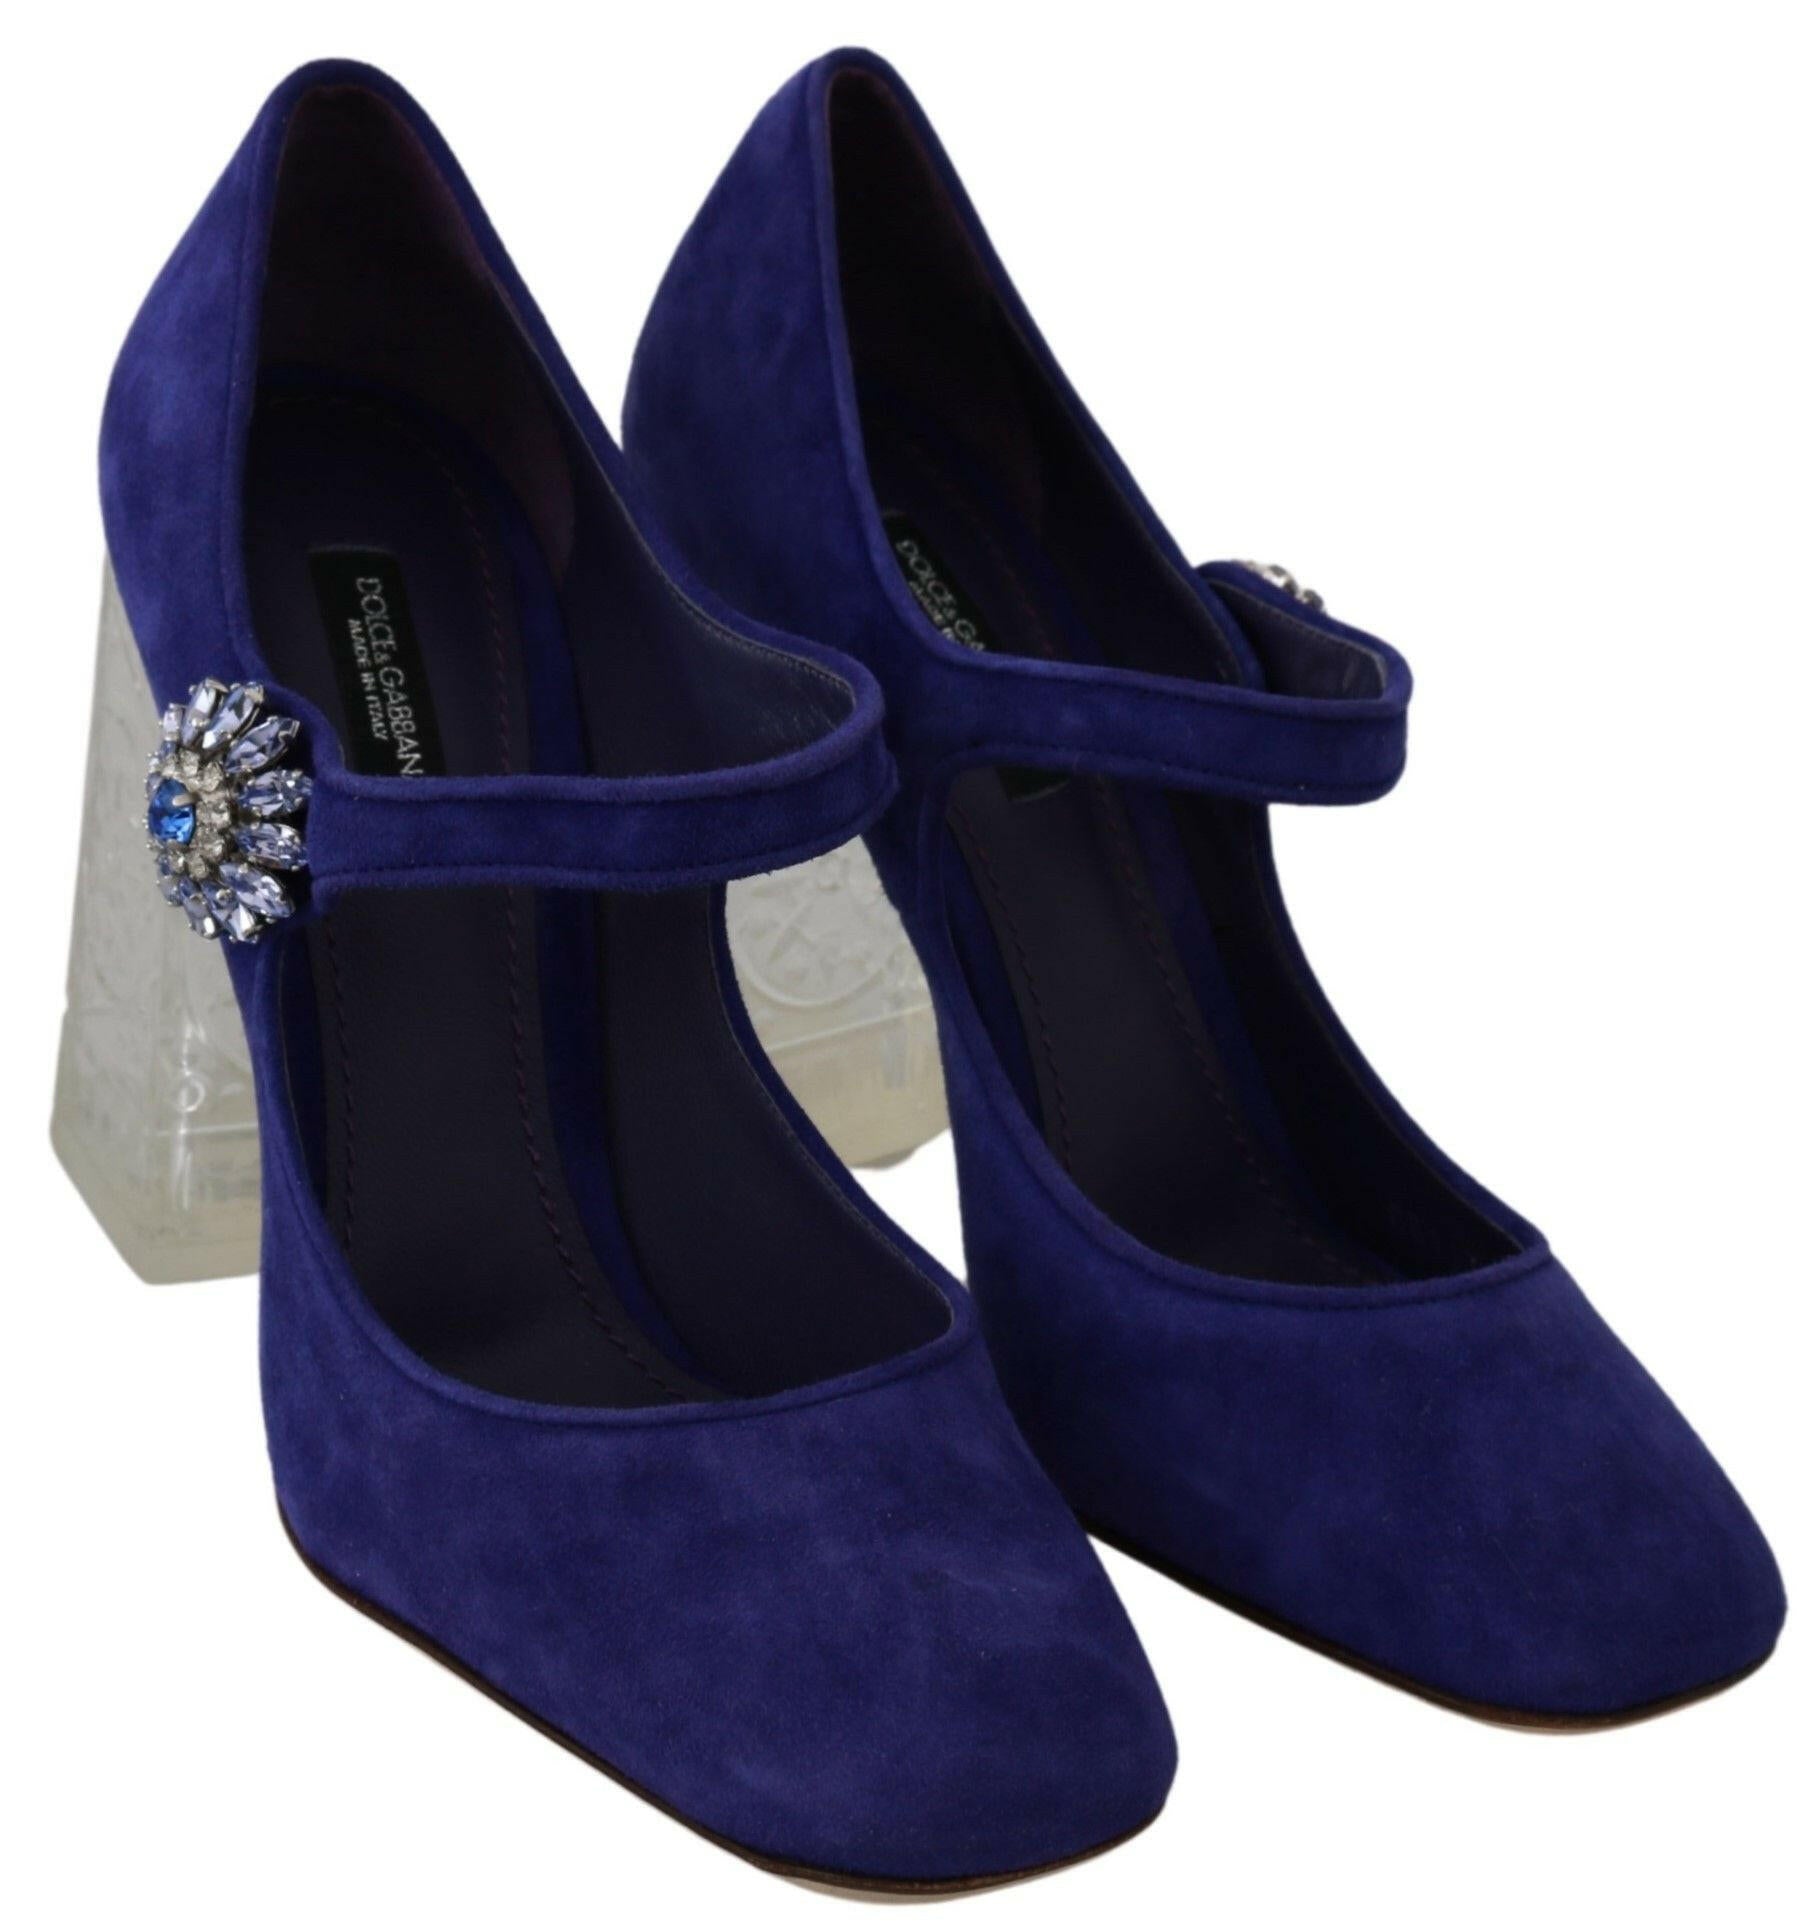 Dolce & Gabbana Purple Suede Crystal Pumps Heels Shoes - GENUINE AUTHENTIC BRAND LLC  